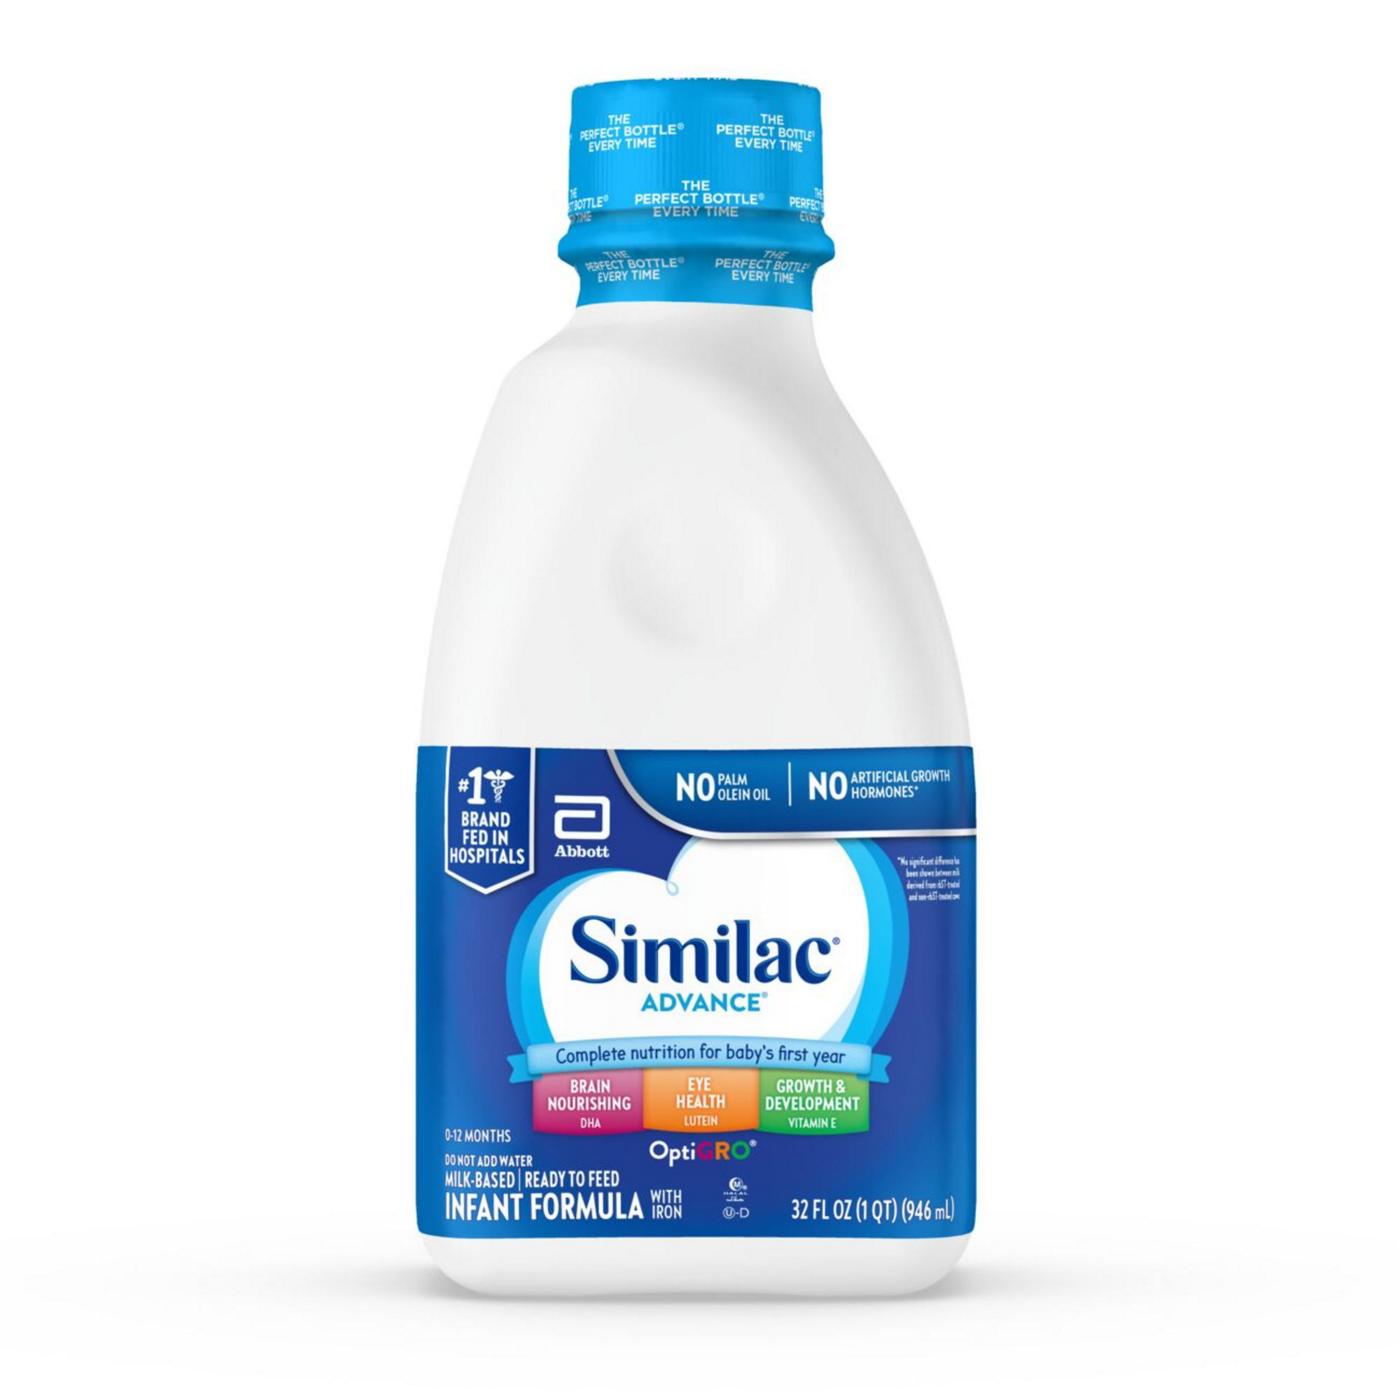 Similac Advance Milk-Based Ready-to-Feed Infant Formula with Iron; image 1 of 11